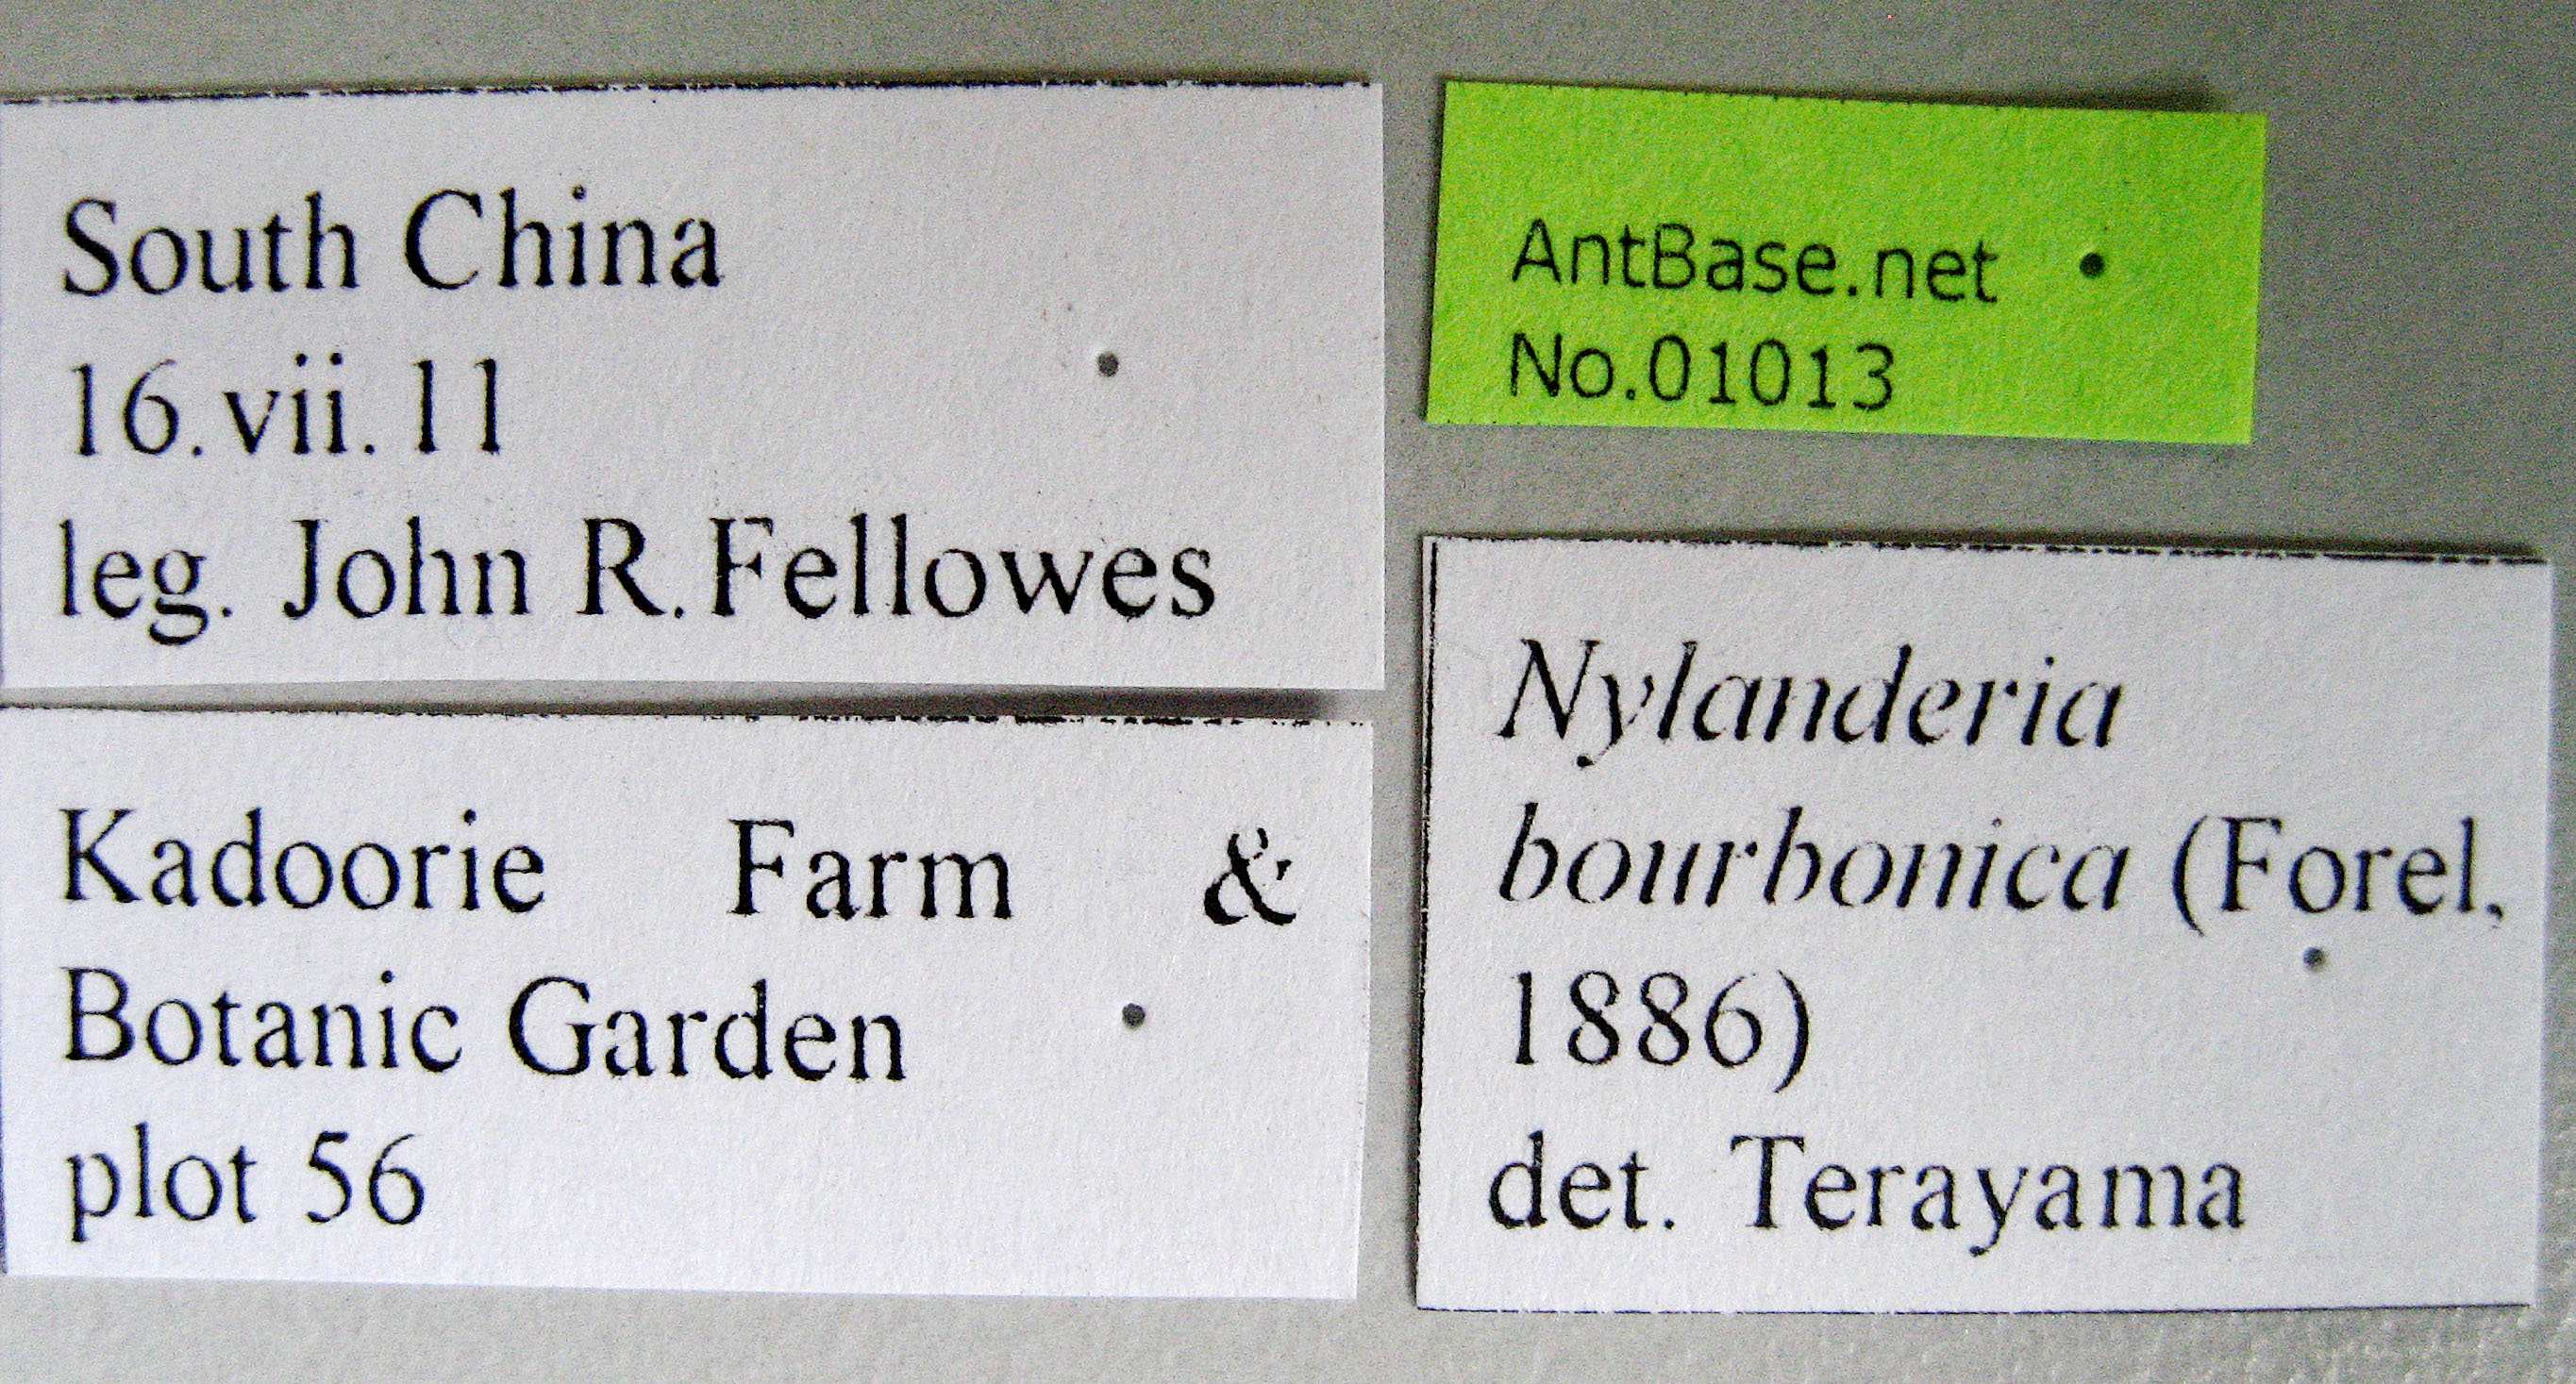 Foto Nylanderia bourbonica Forel, 1886 Label